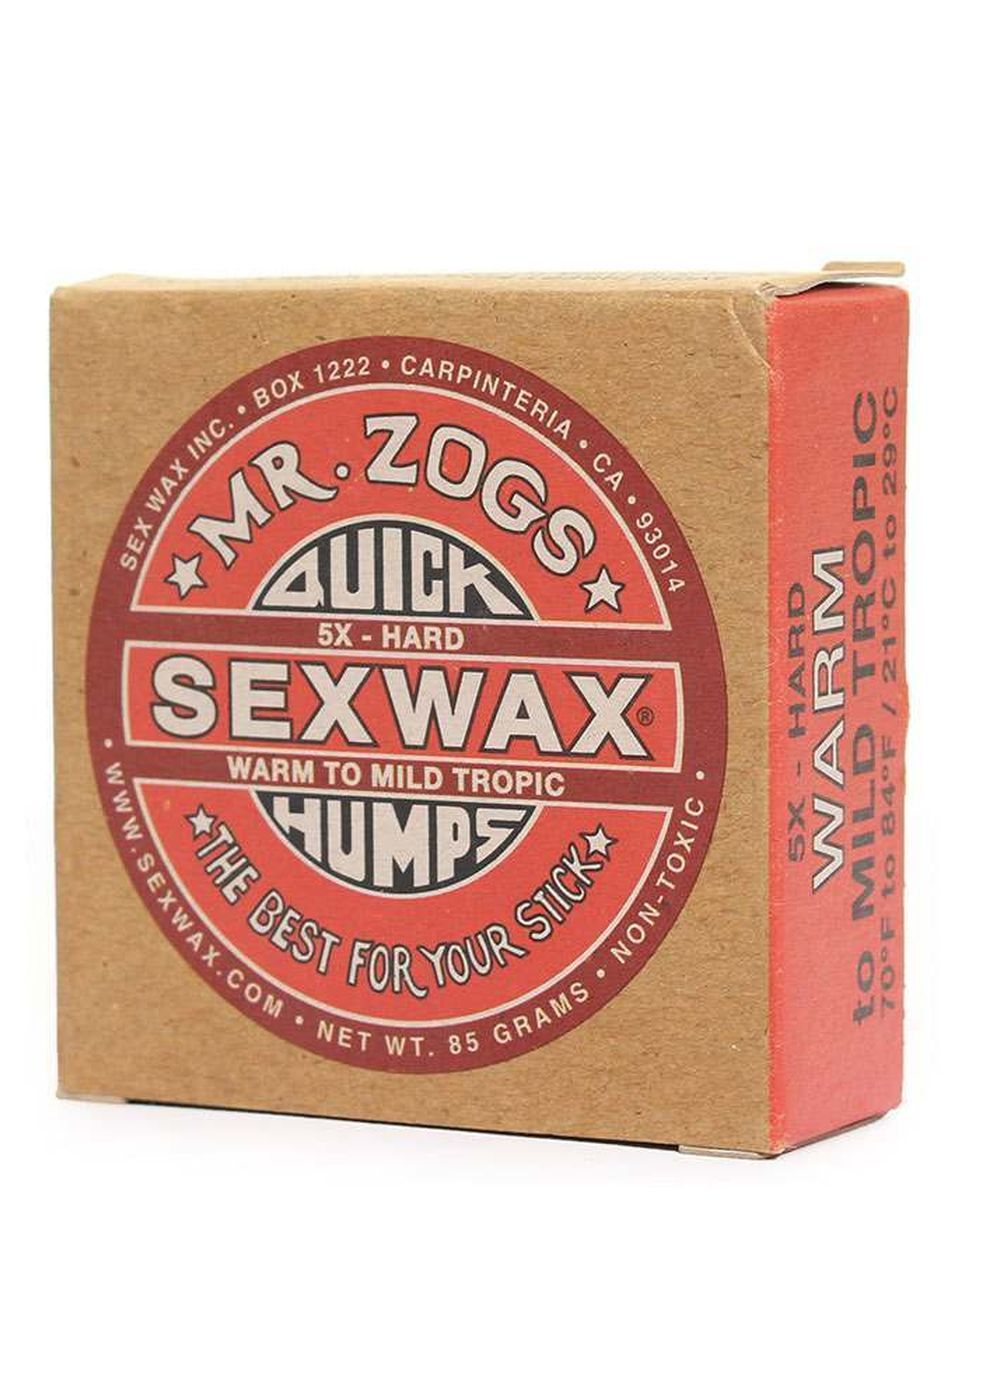 Sexwax Quick Humps Hard Surfboard Wax Red Warm To Mid Tropic